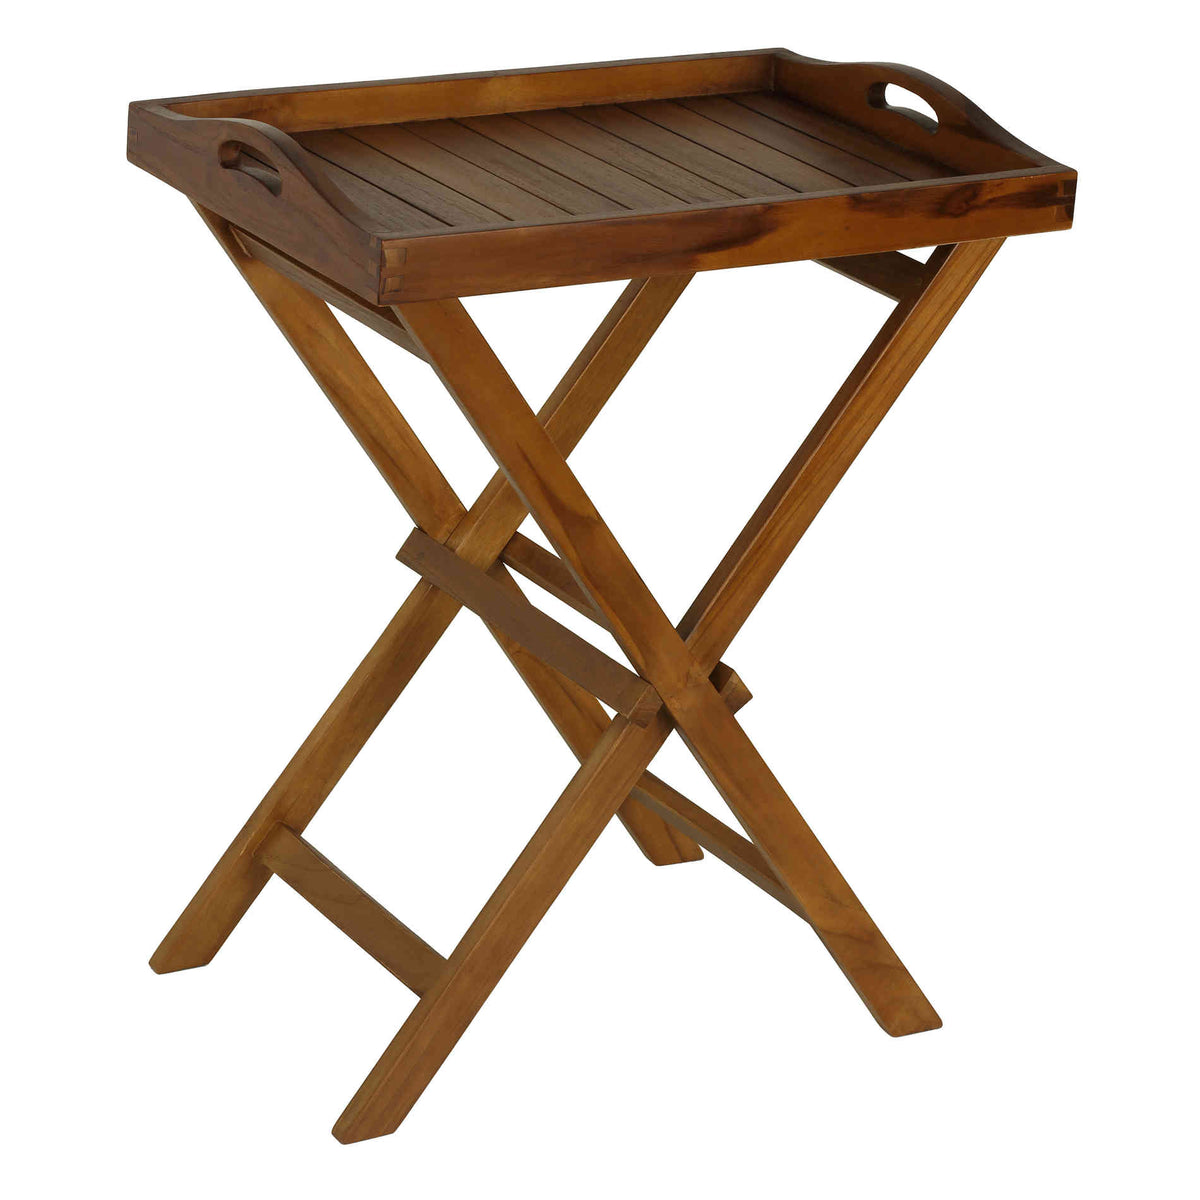 Bare Decor Kalos Indoor/Outdoor Tray Table in Solid Teak Wood